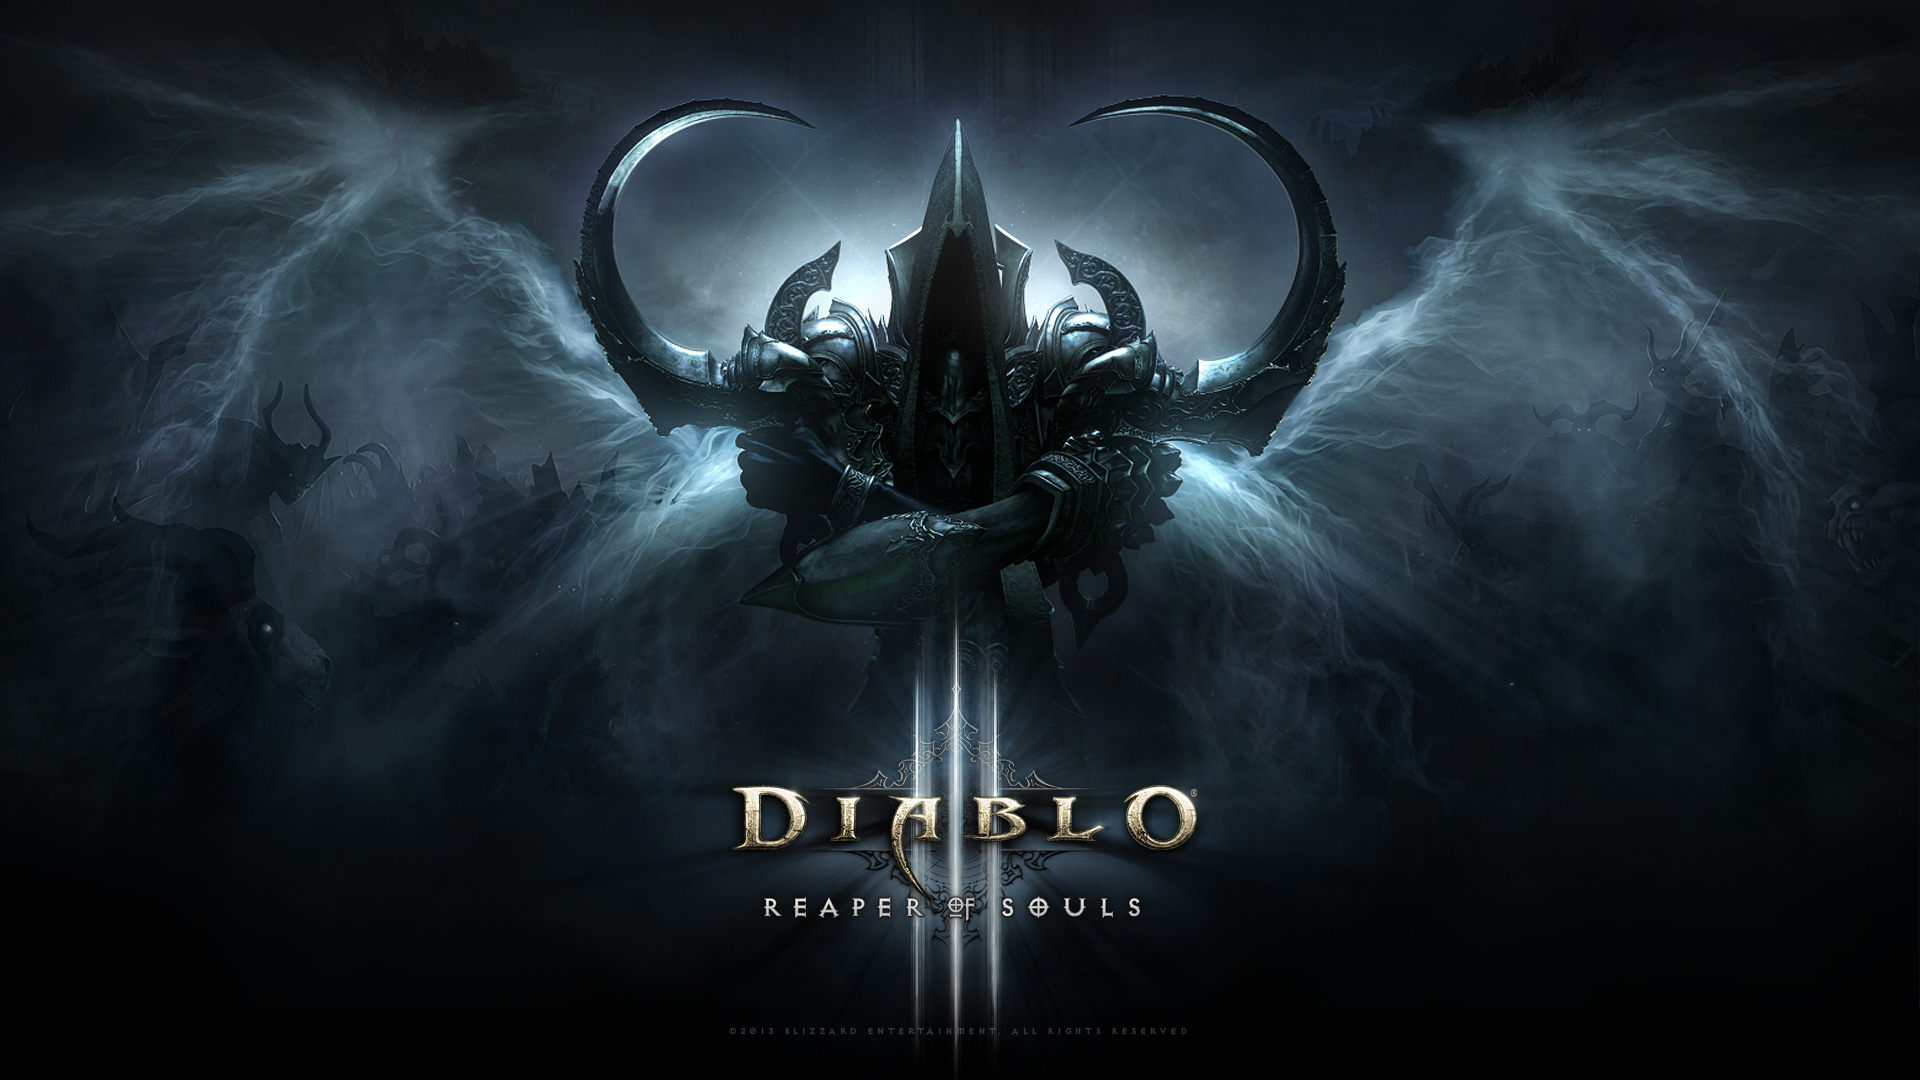 General 1920x1080 Diablo III Diablo 3: Reaper of Souls video games Blizzard Entertainment fantasy art video game art scythe dark fantasy dark PC gaming